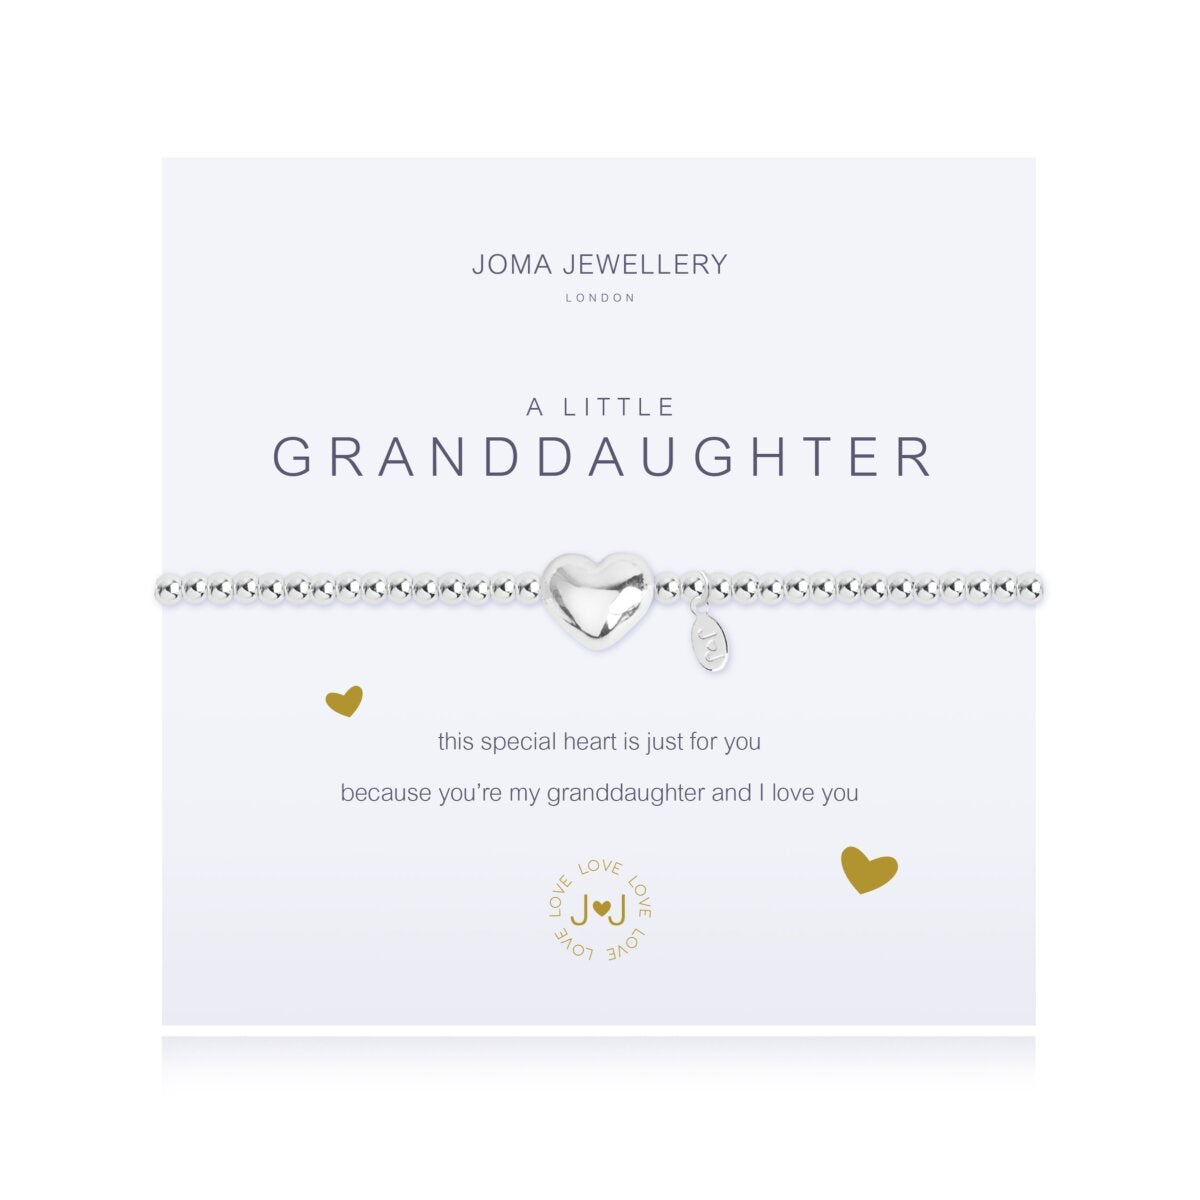 Joma Jewellery 'A Little' Granddaughter